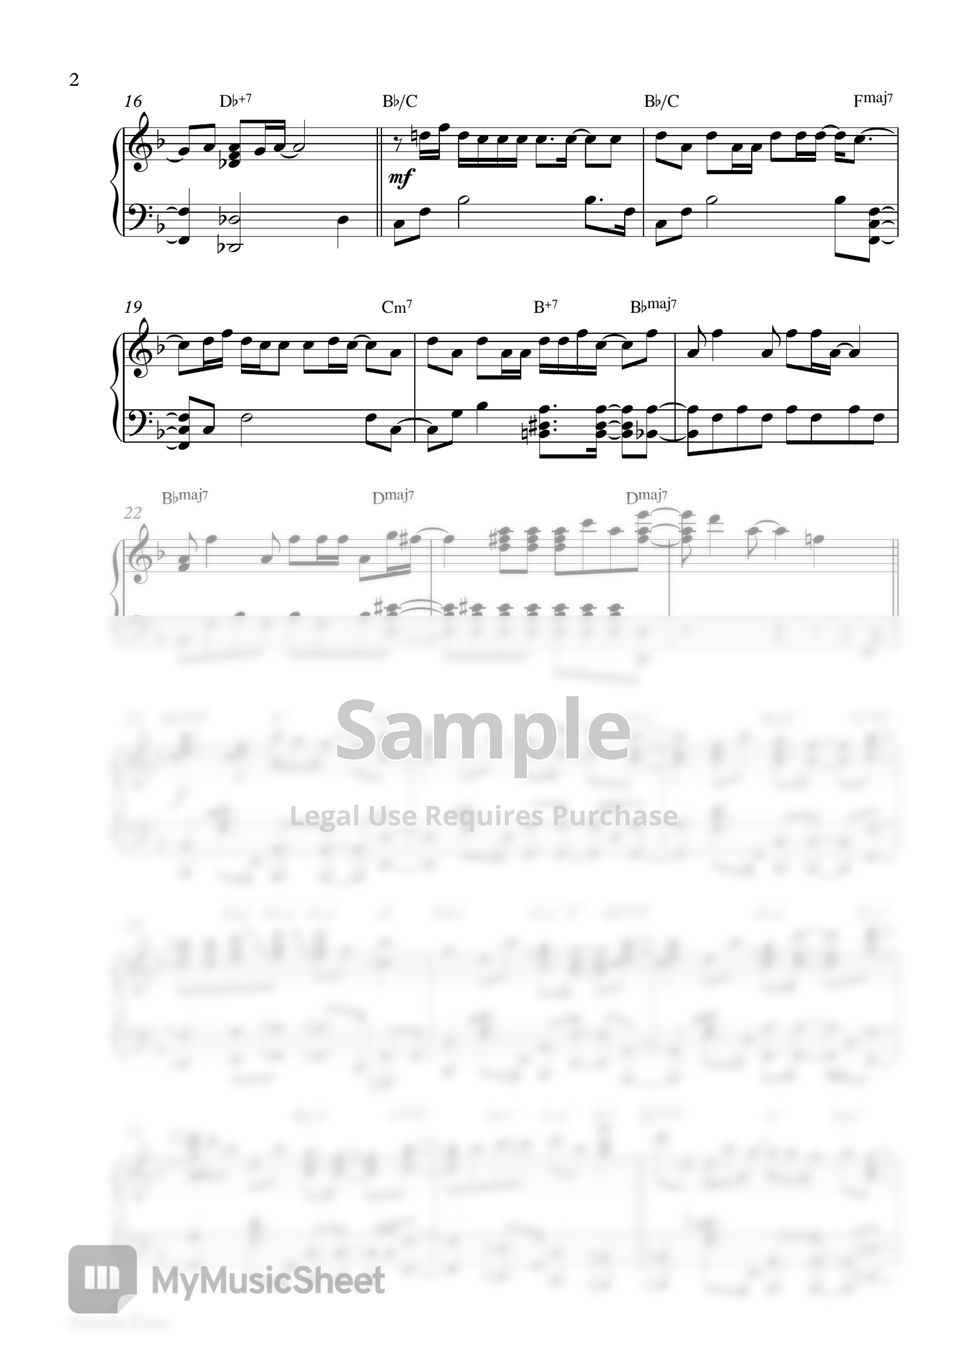 Red Velvet - Queendom (Piano Sheet) by Pianella Piano